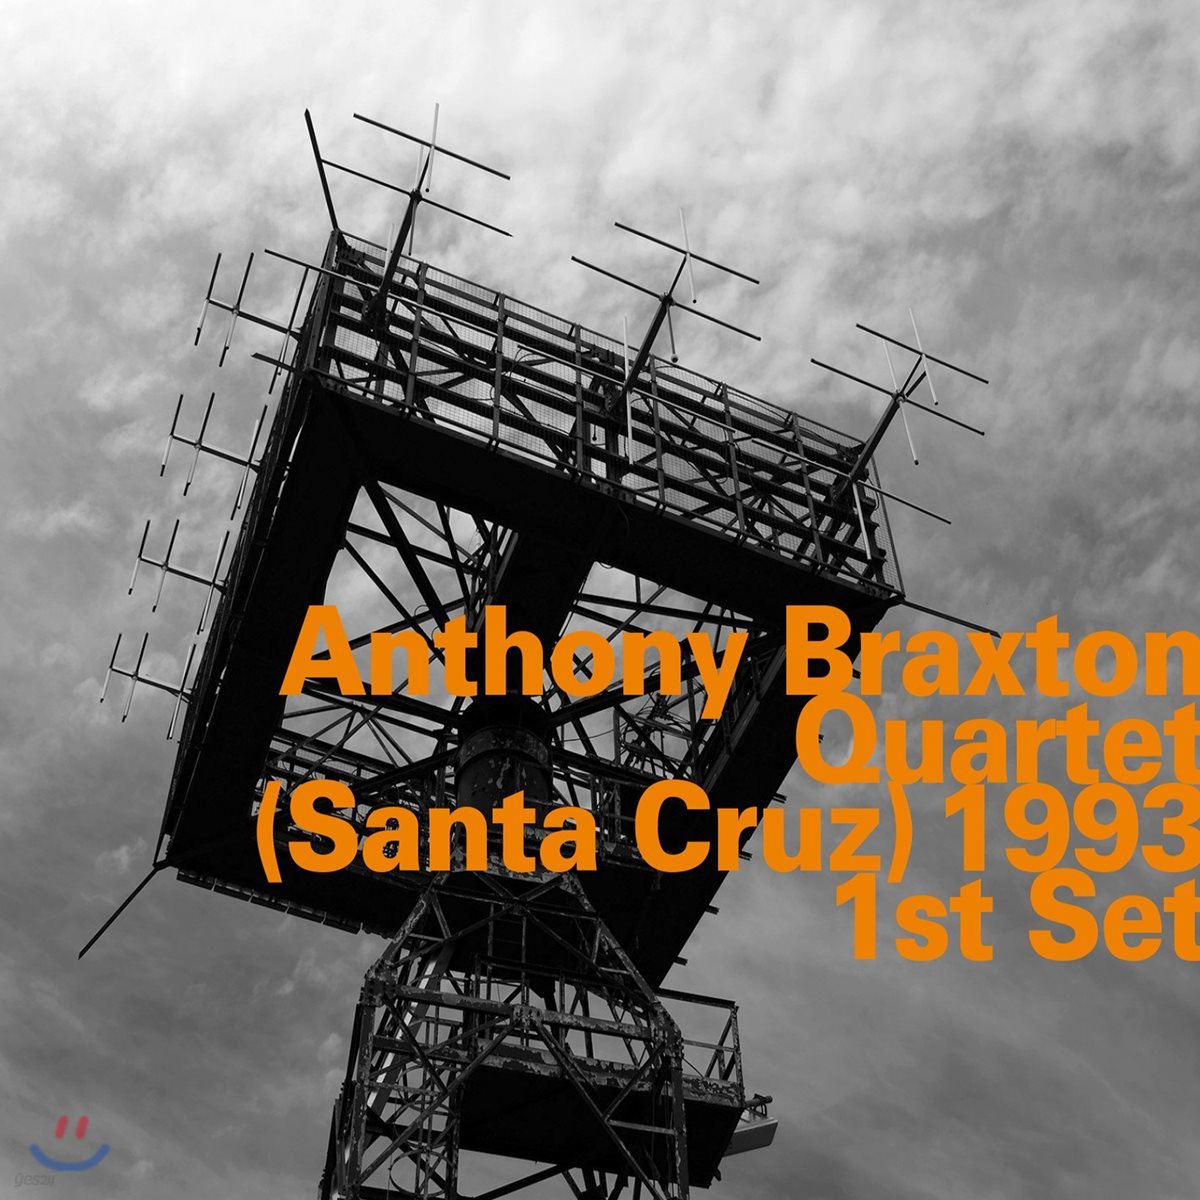 Anthony Braxton (앤소니 브랙스톤 쿼텟) - Quartet (Santa Cruz) 1993, 1st Set